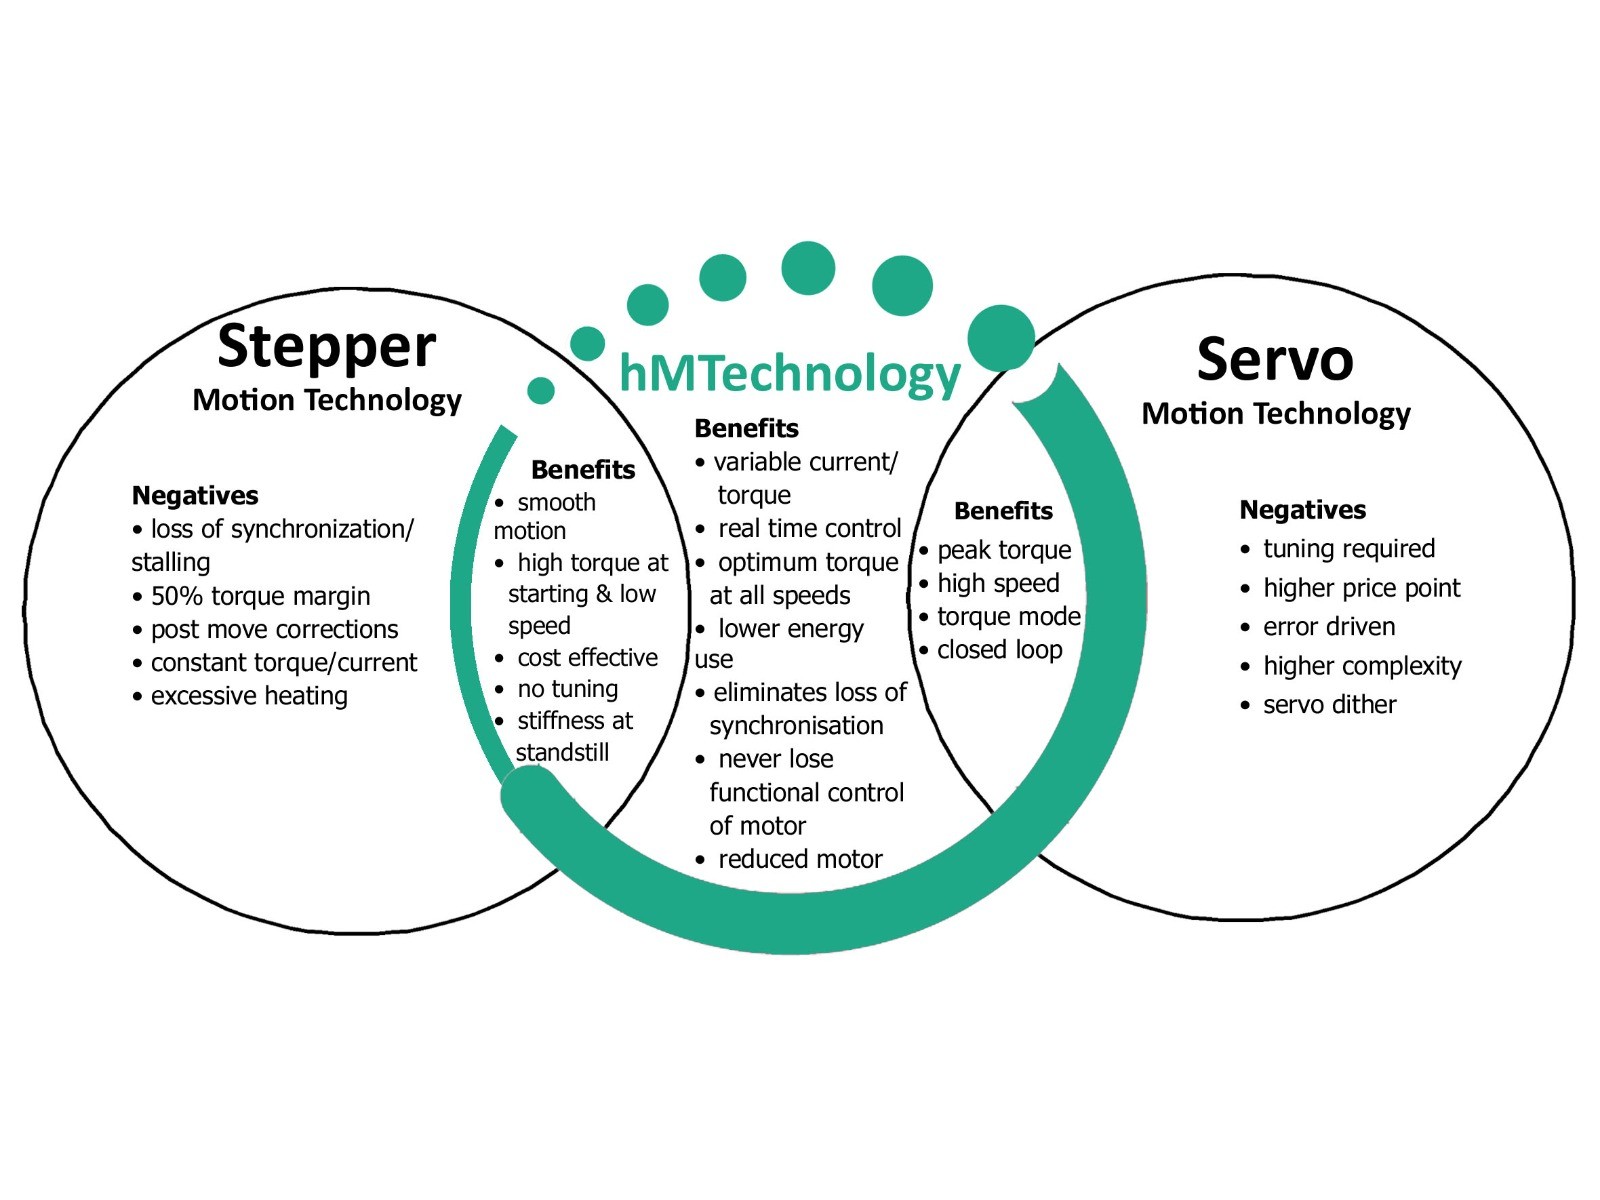 stepper close-loop hMTechnology circles